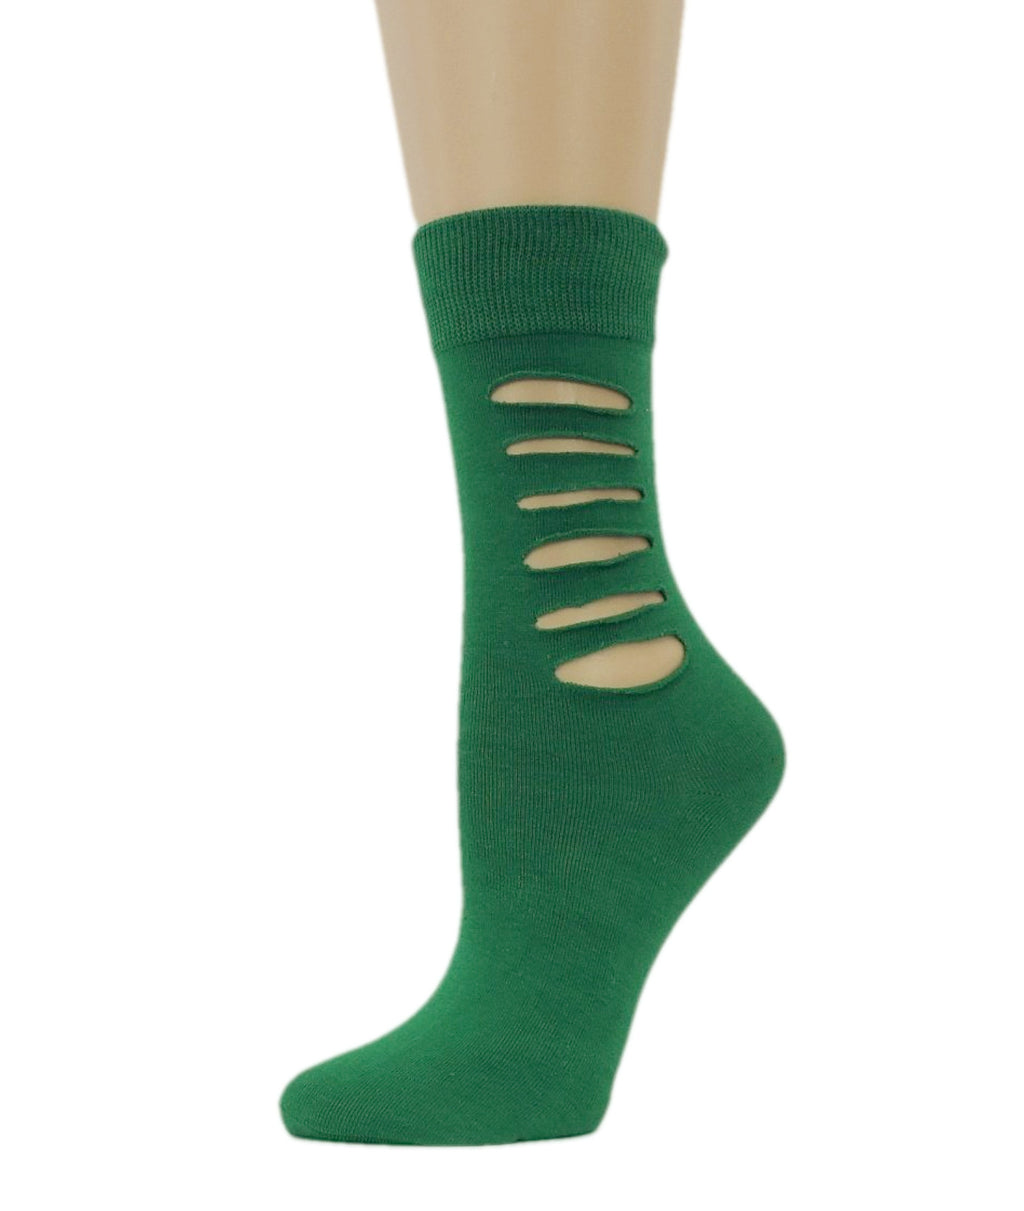 Ripped Leaf Green Cotton Socks - Global Trendz Fashion®